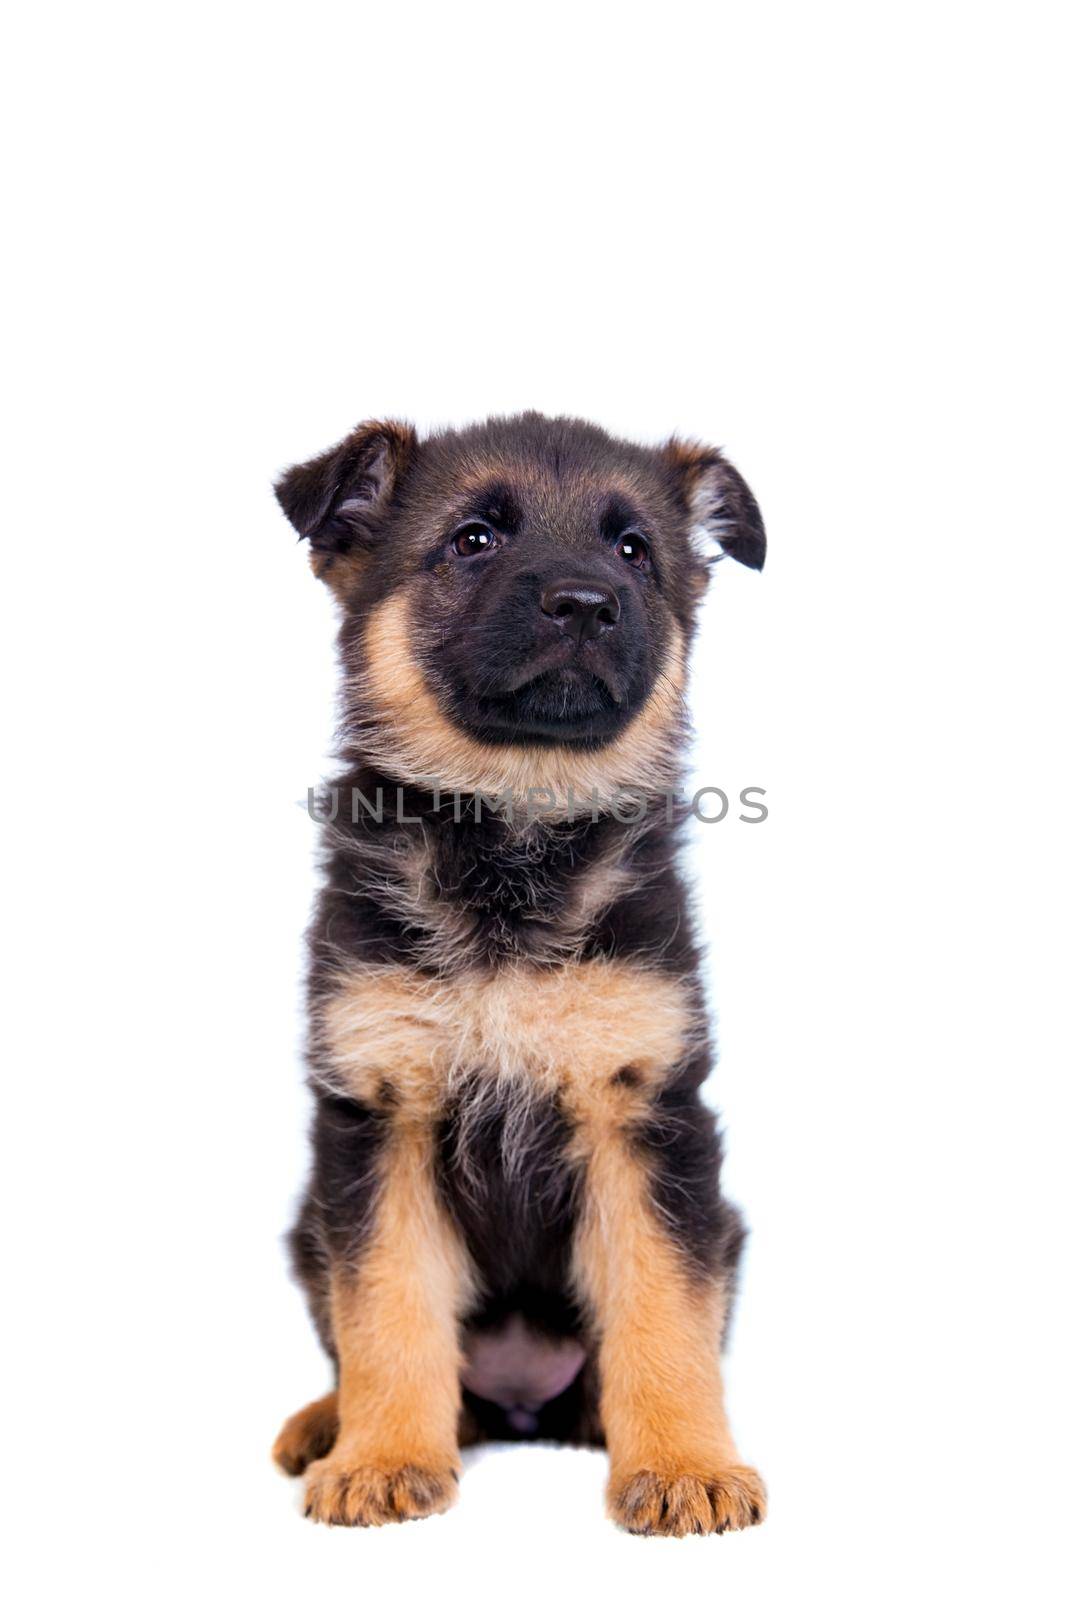 German shepherd puppy by RosaJay